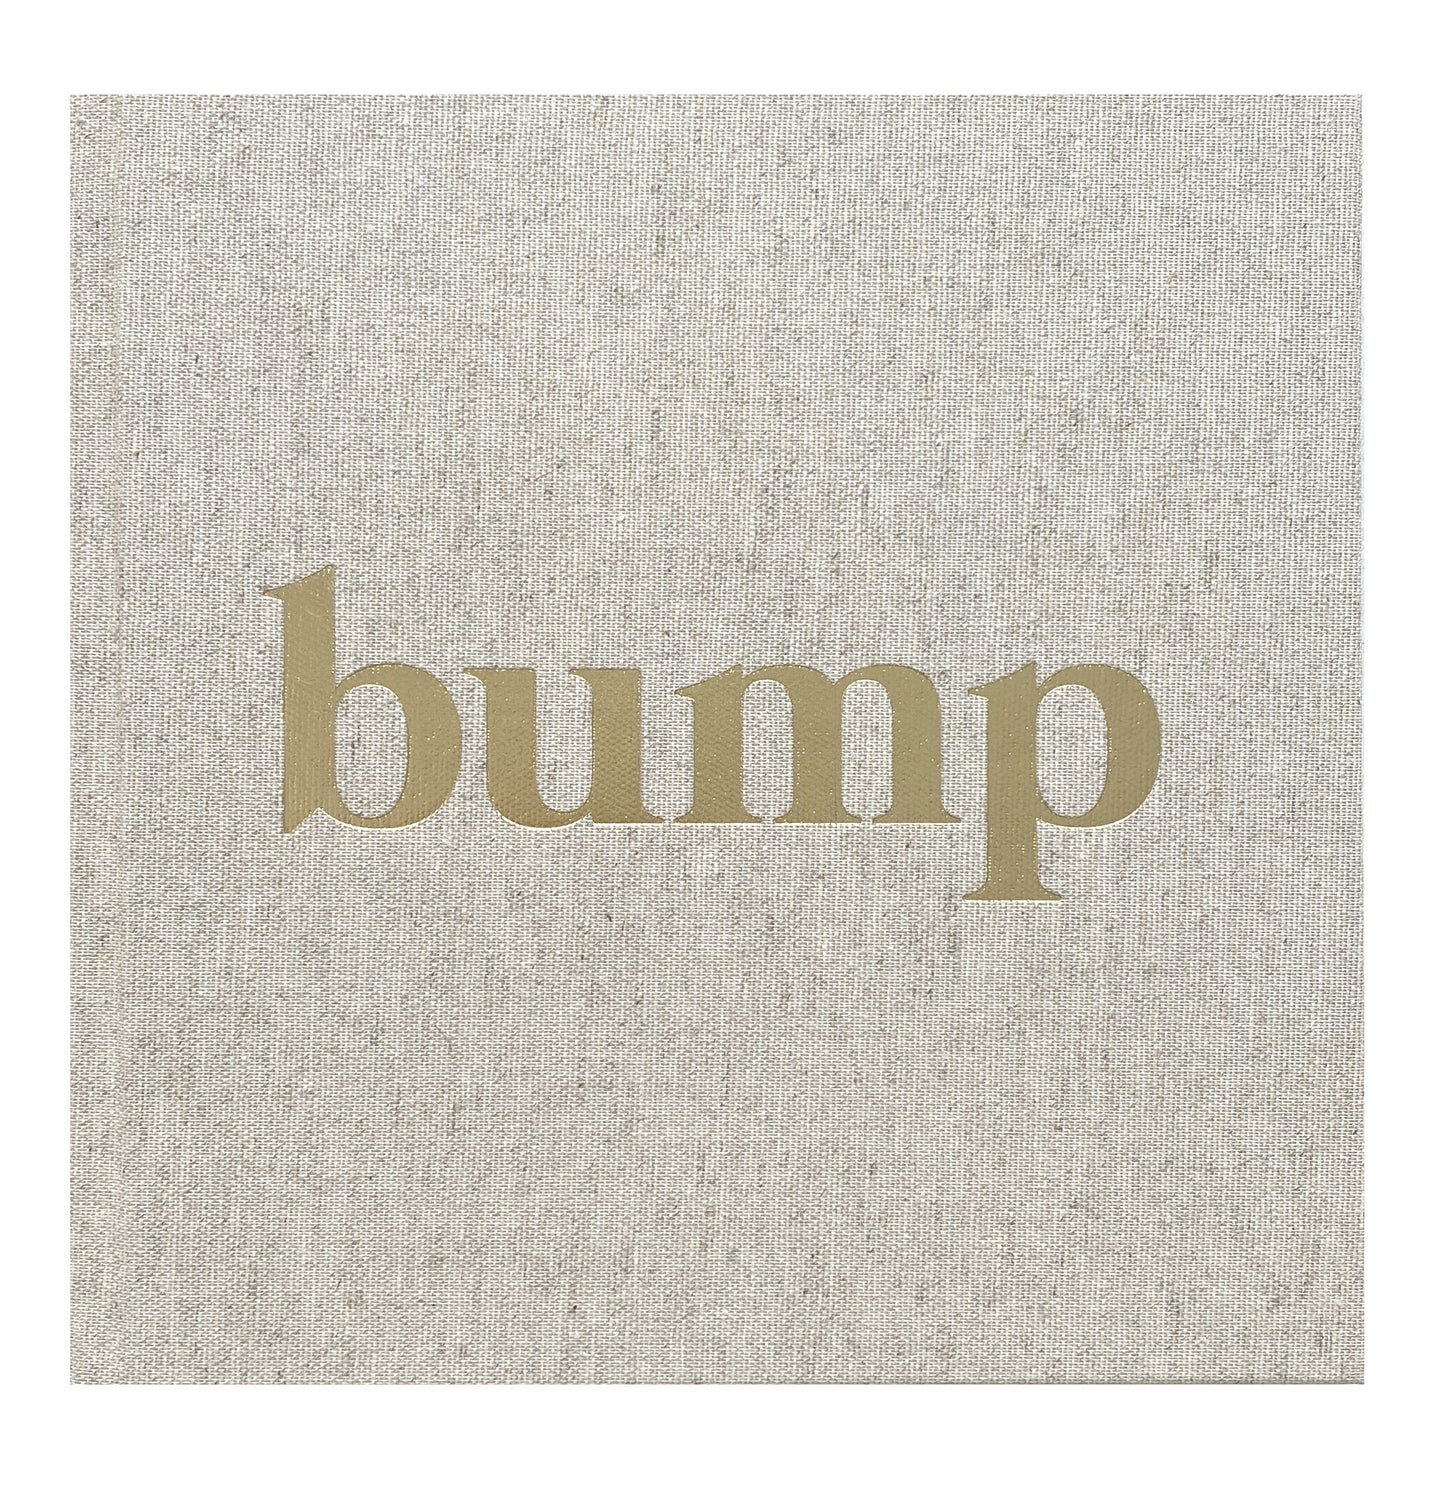 Invulboek | BUMP